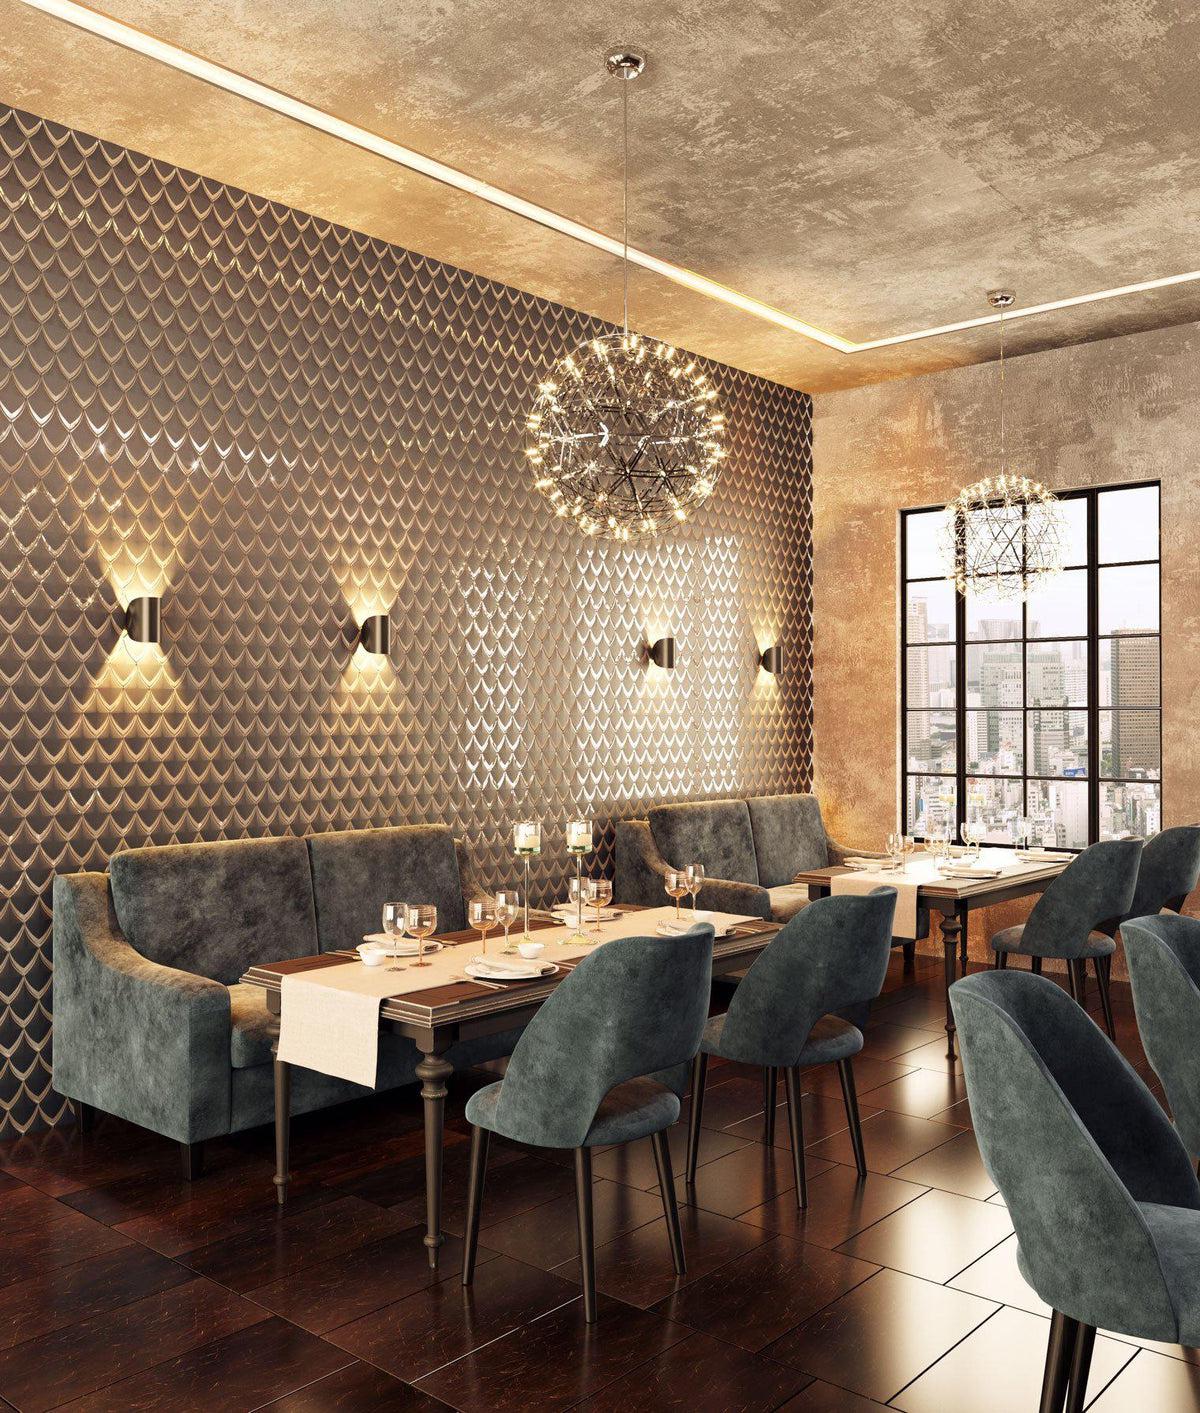 Elegant City Restaurant with Art Deco Tile Design and Modern Chandeliers 